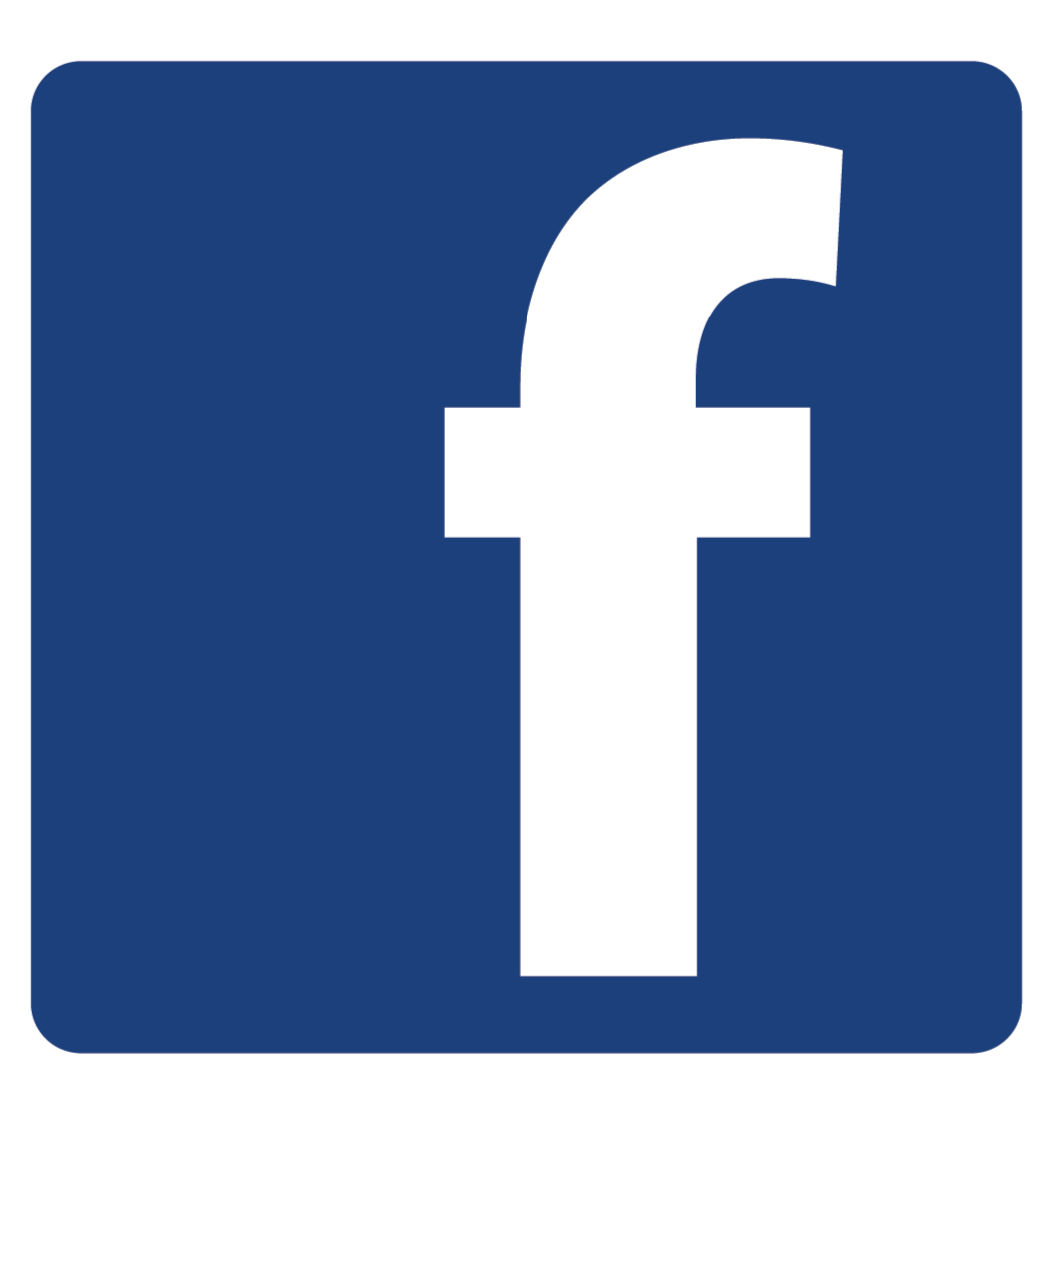 Facebook, Inc. Logo Computer Icons Like button.